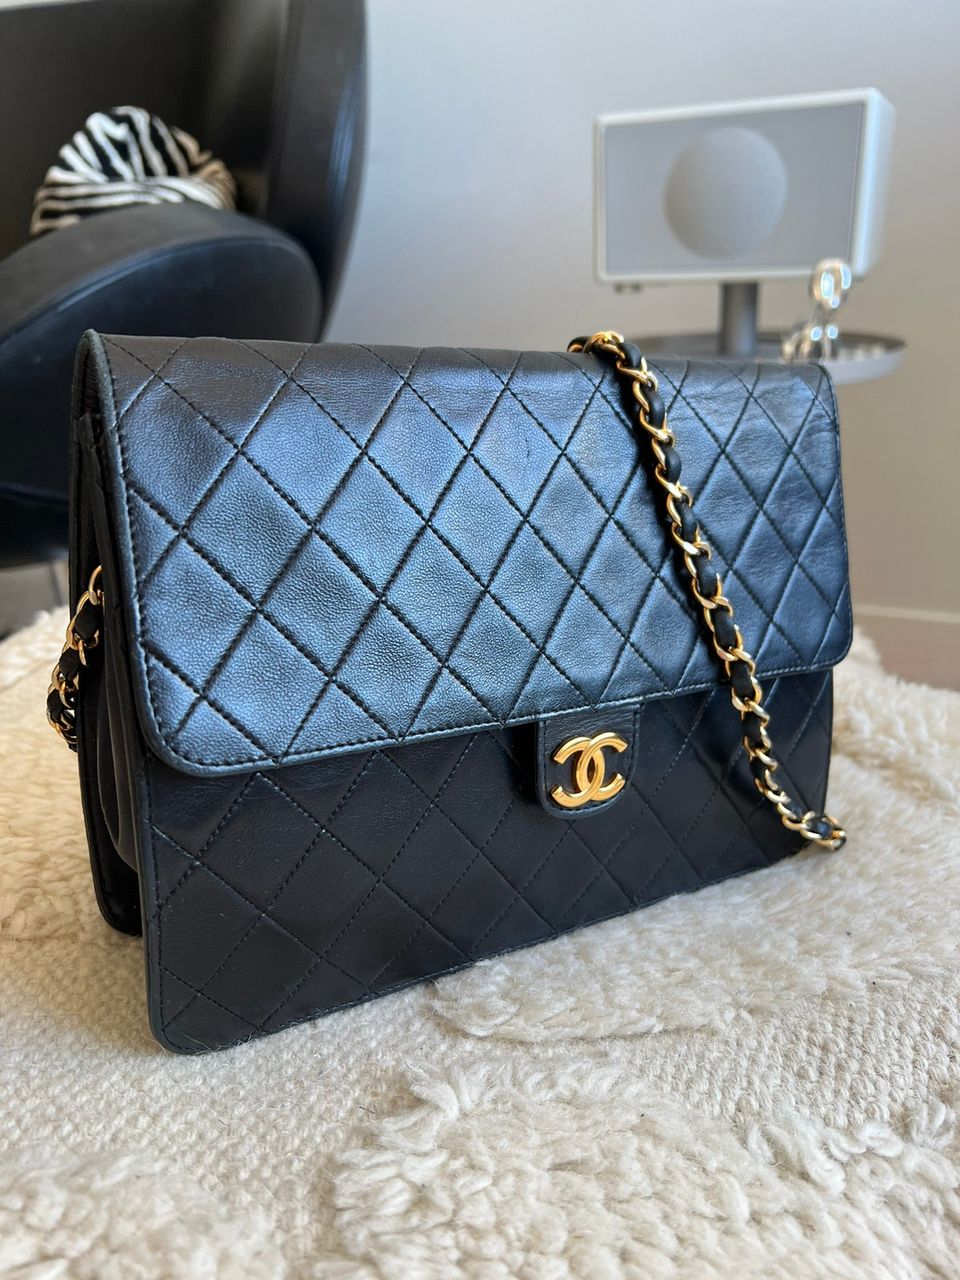 Chanel vintage cc bag